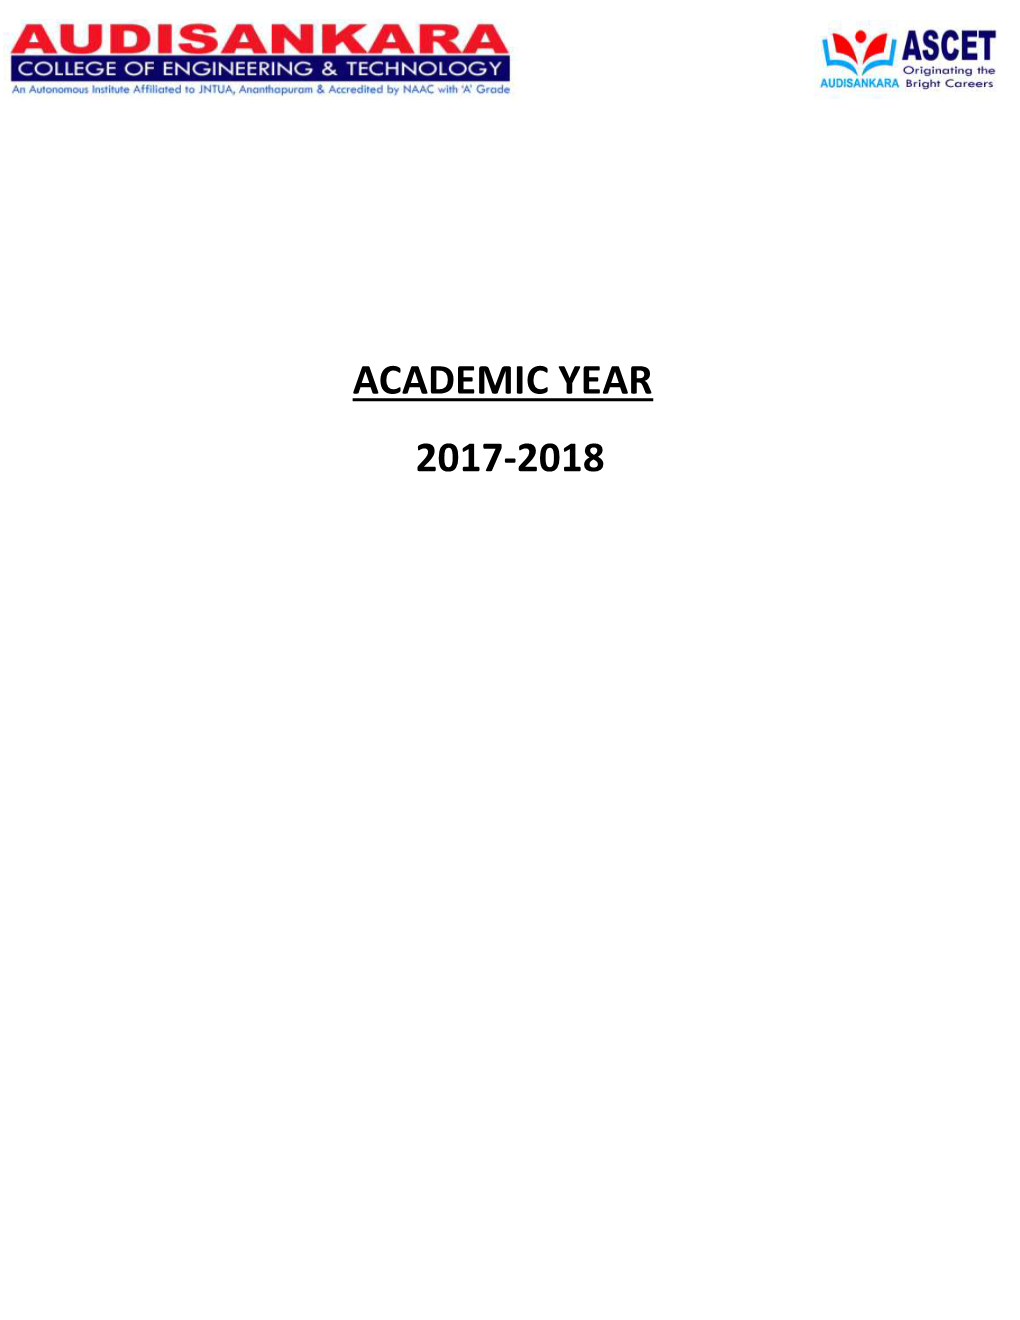 Academic Year 2017-2018